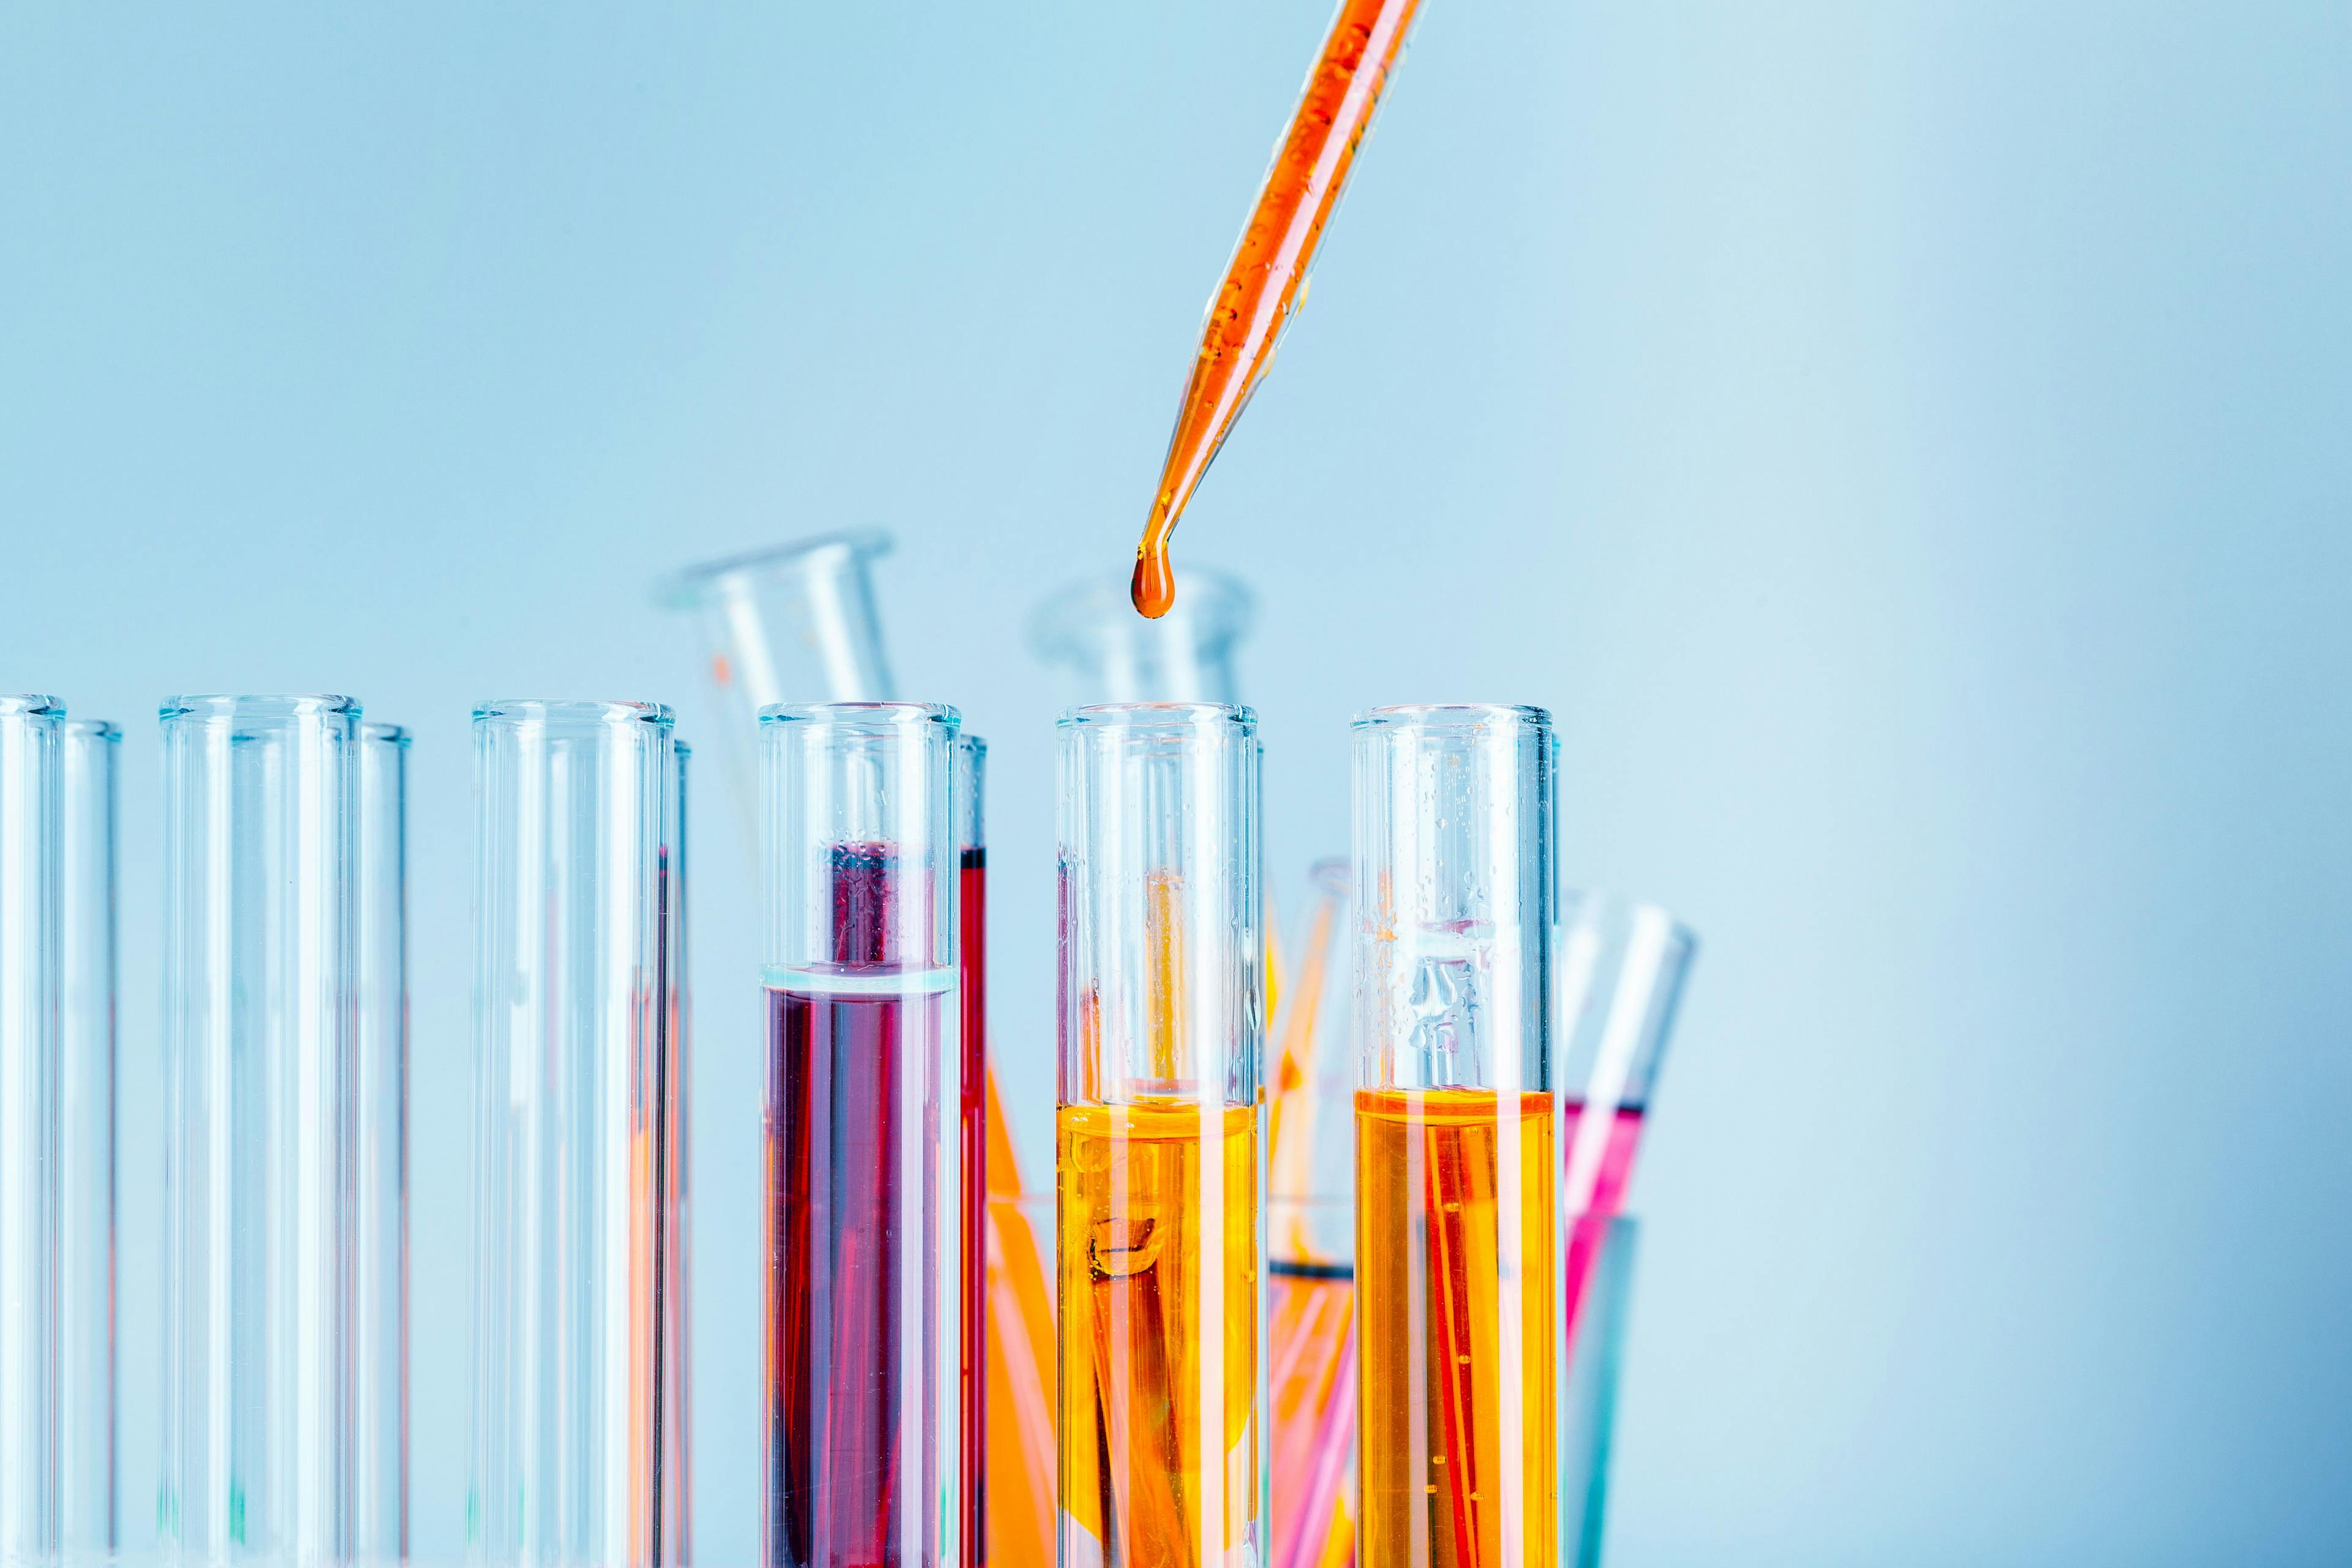 vials with different colored liquid | Image credit: fotofabrika - stock.adobe.com